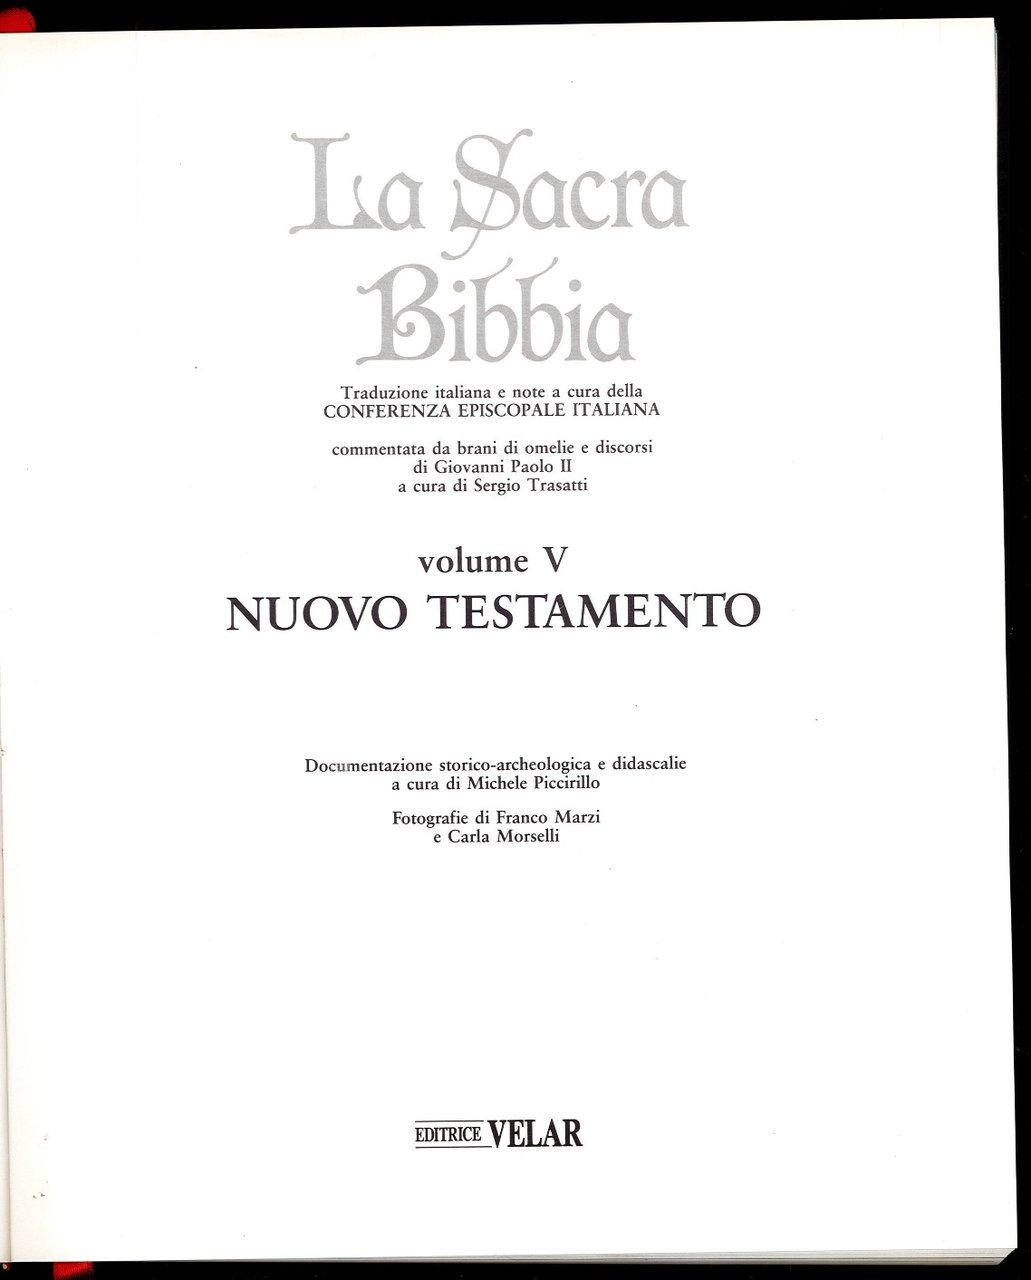 La Sacra Bibbia volume V. Nuovo testamento